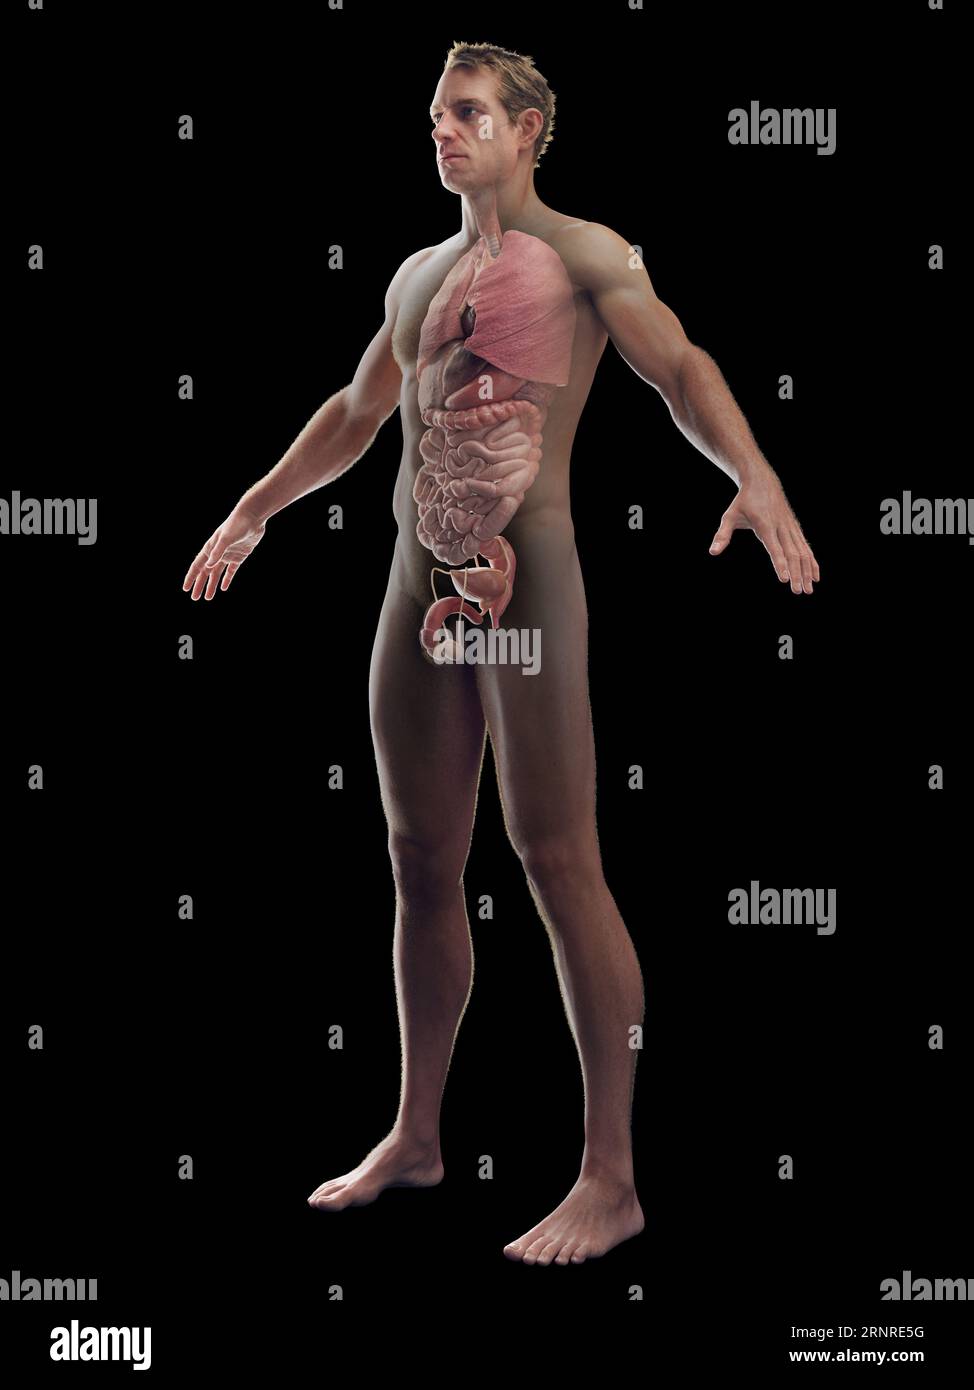 Male internal organs, illustration Stock Photo